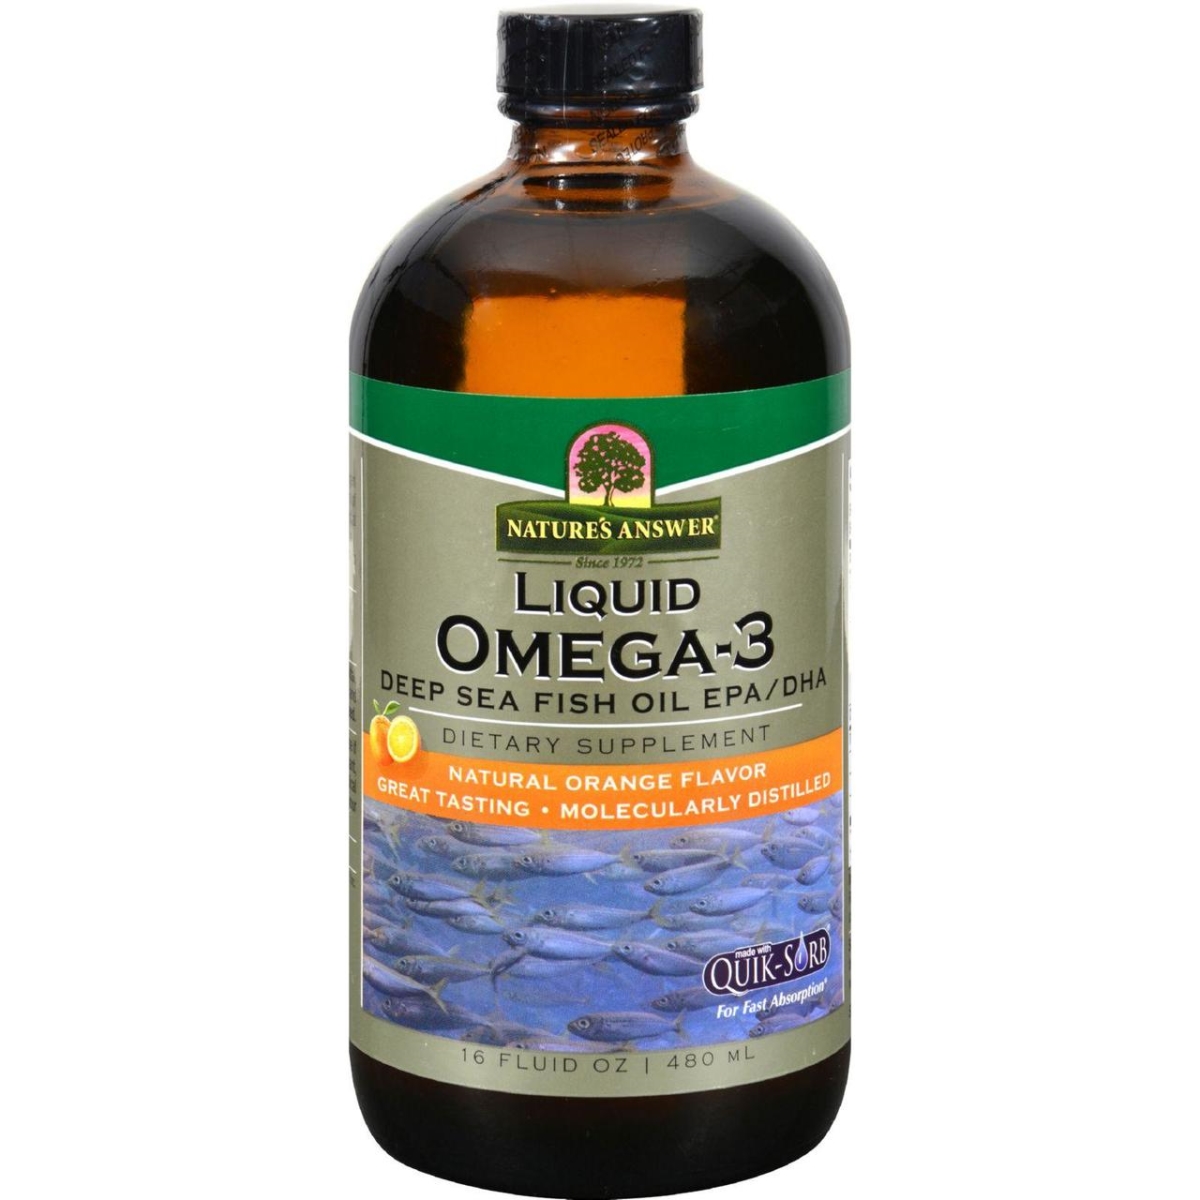 Natures Answer Hg0793760 16 Fl Oz Liquid Omega-3 Fish Oil